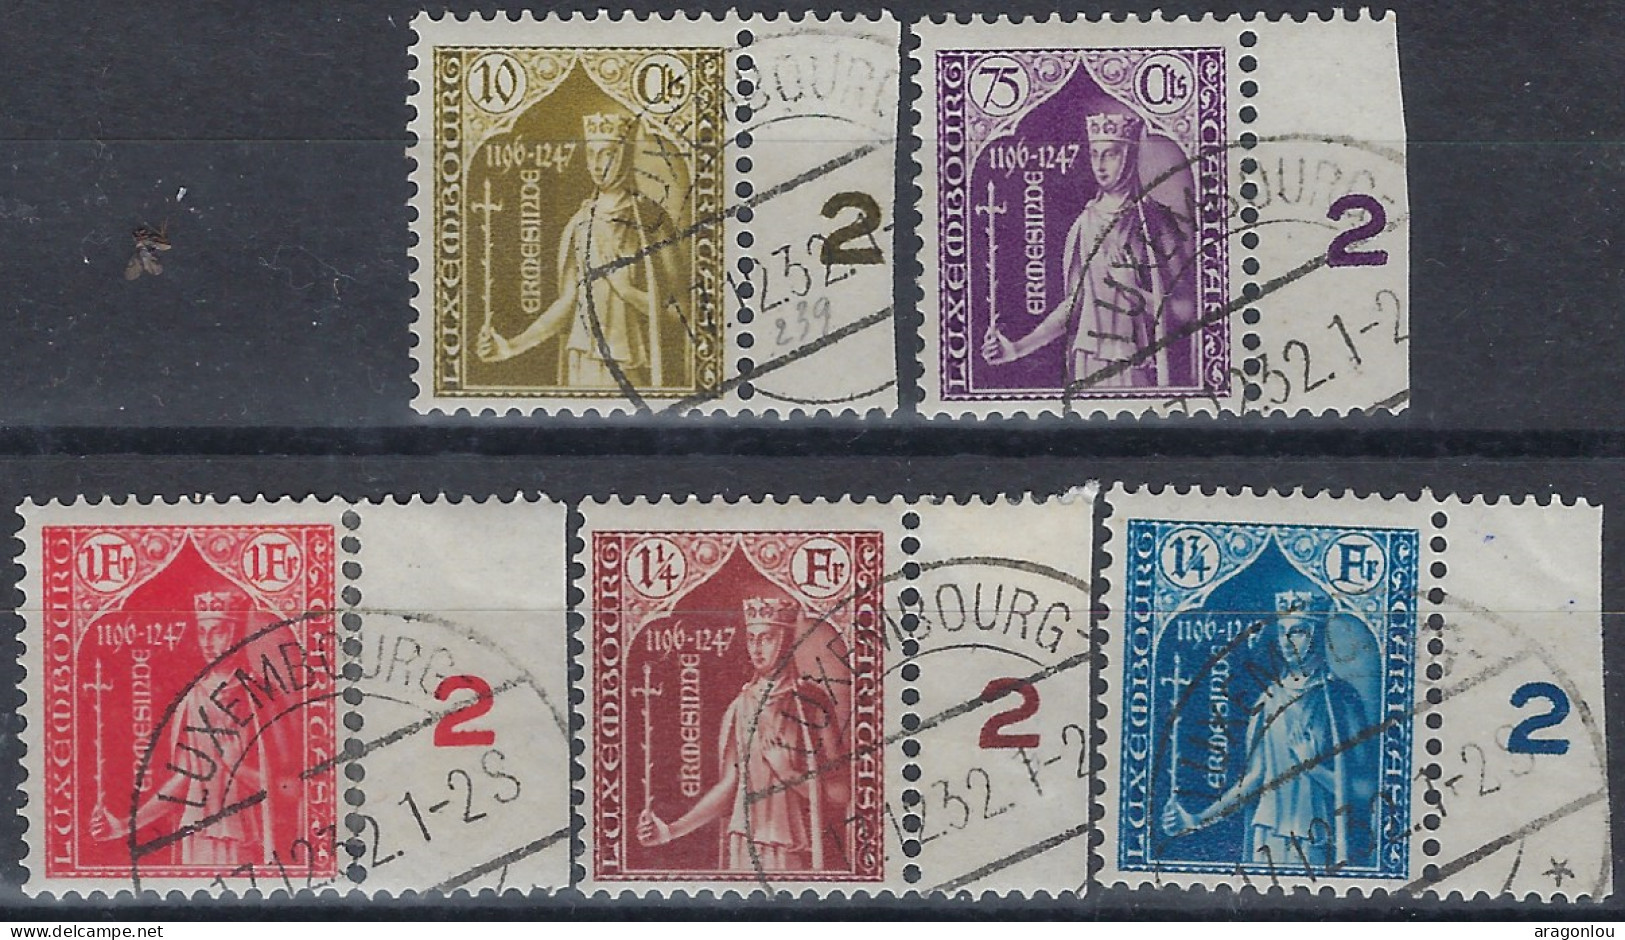 Luxembourg - Luxemburg - Timbres  1932  Série    Comtesse   Ermesinde    Caritas °   VC.140,- - Gebraucht